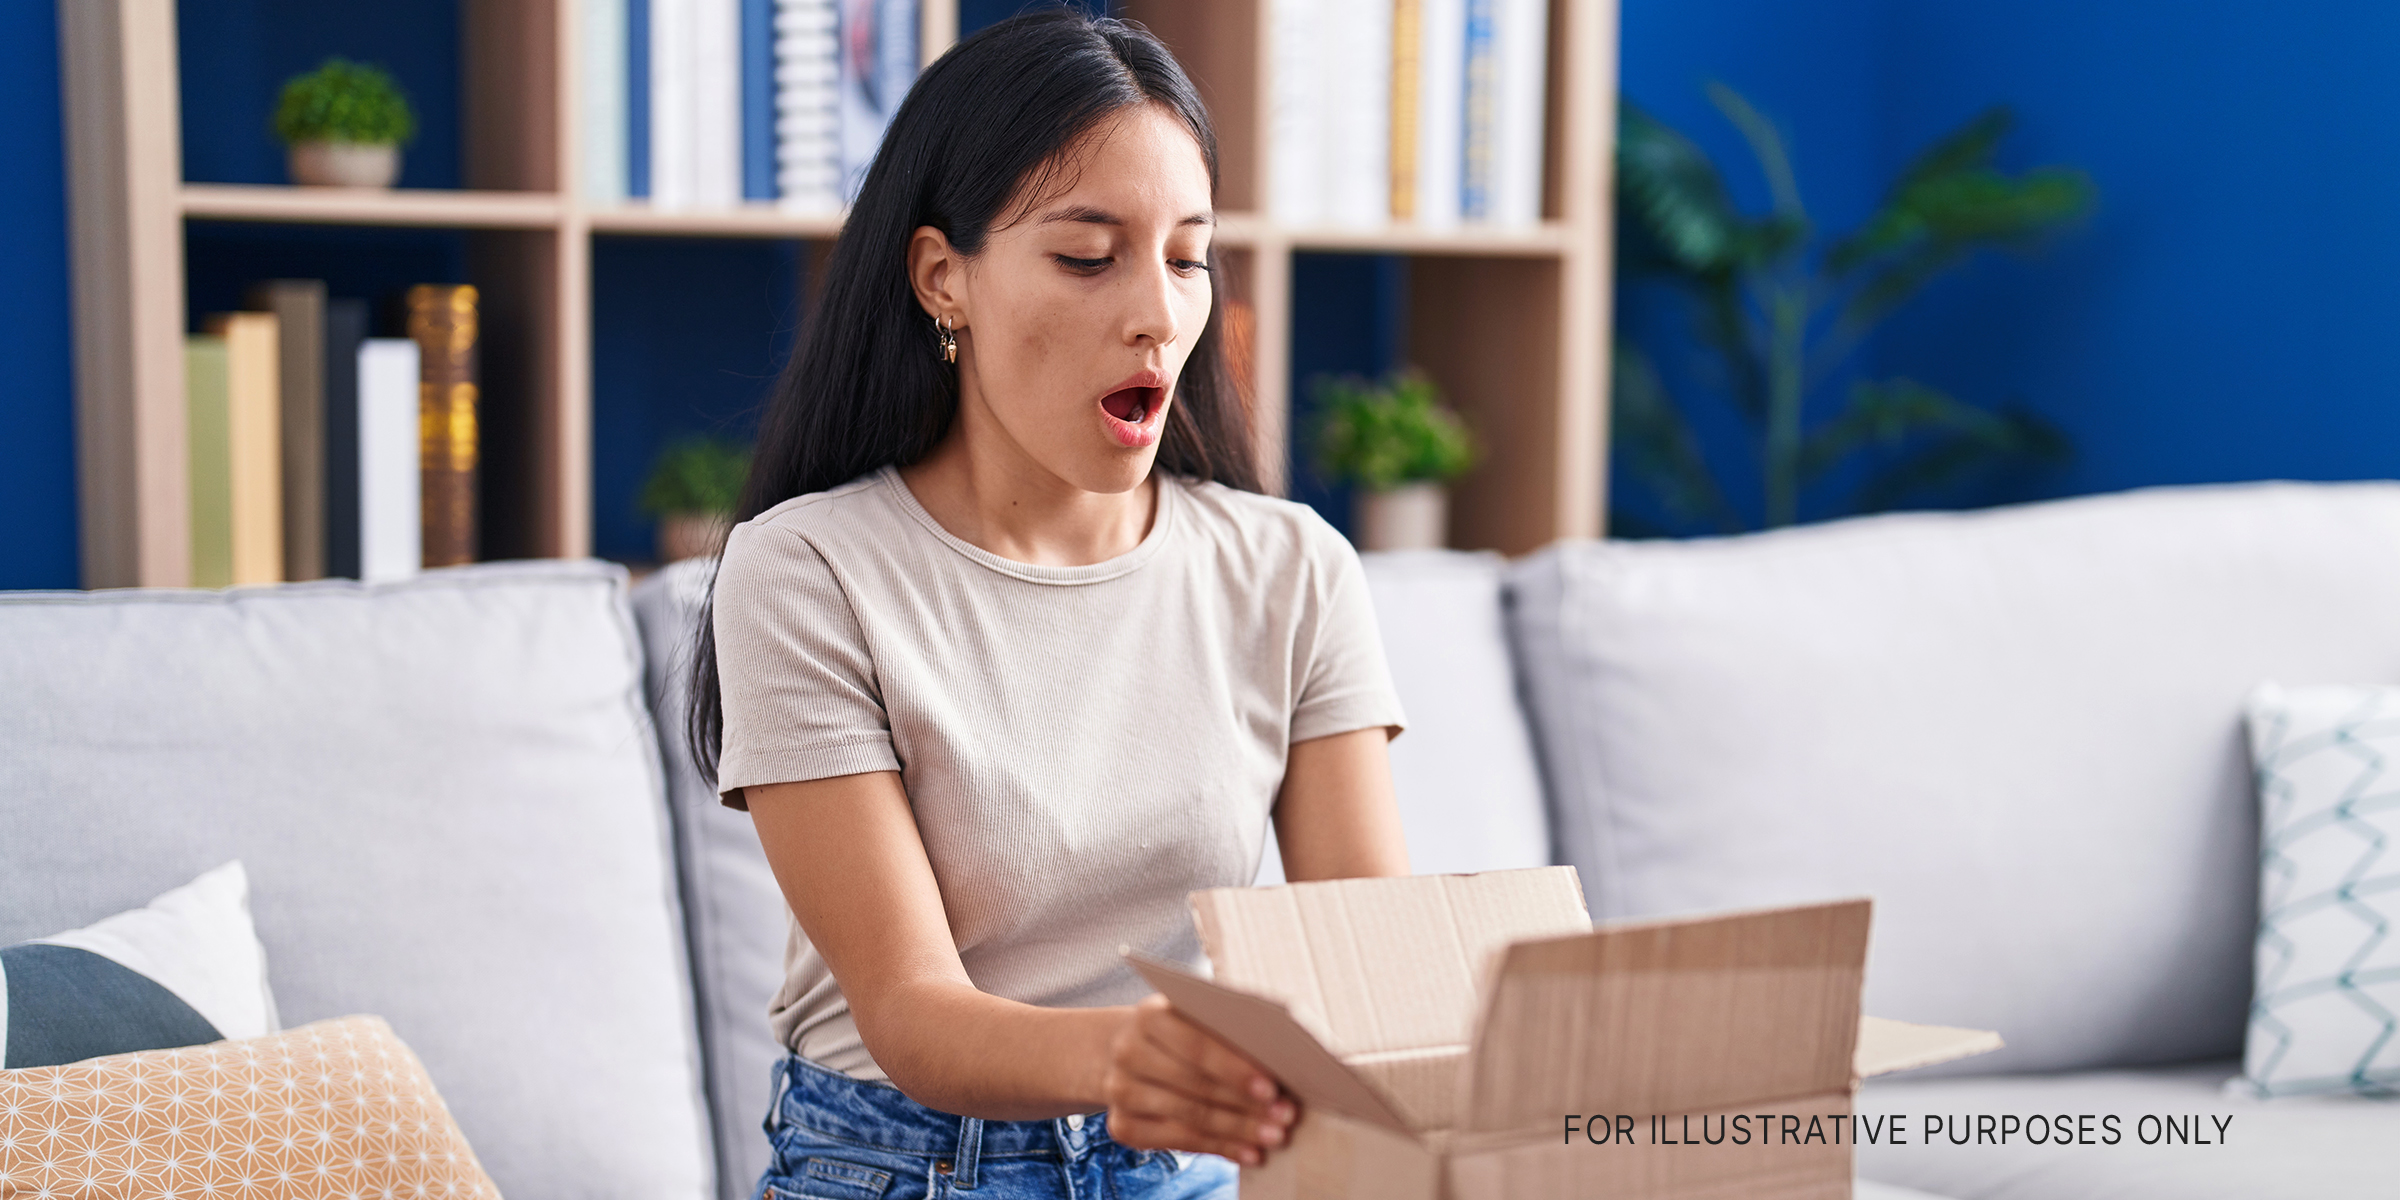 Shocked woman opening a box | Source: Shutterstock